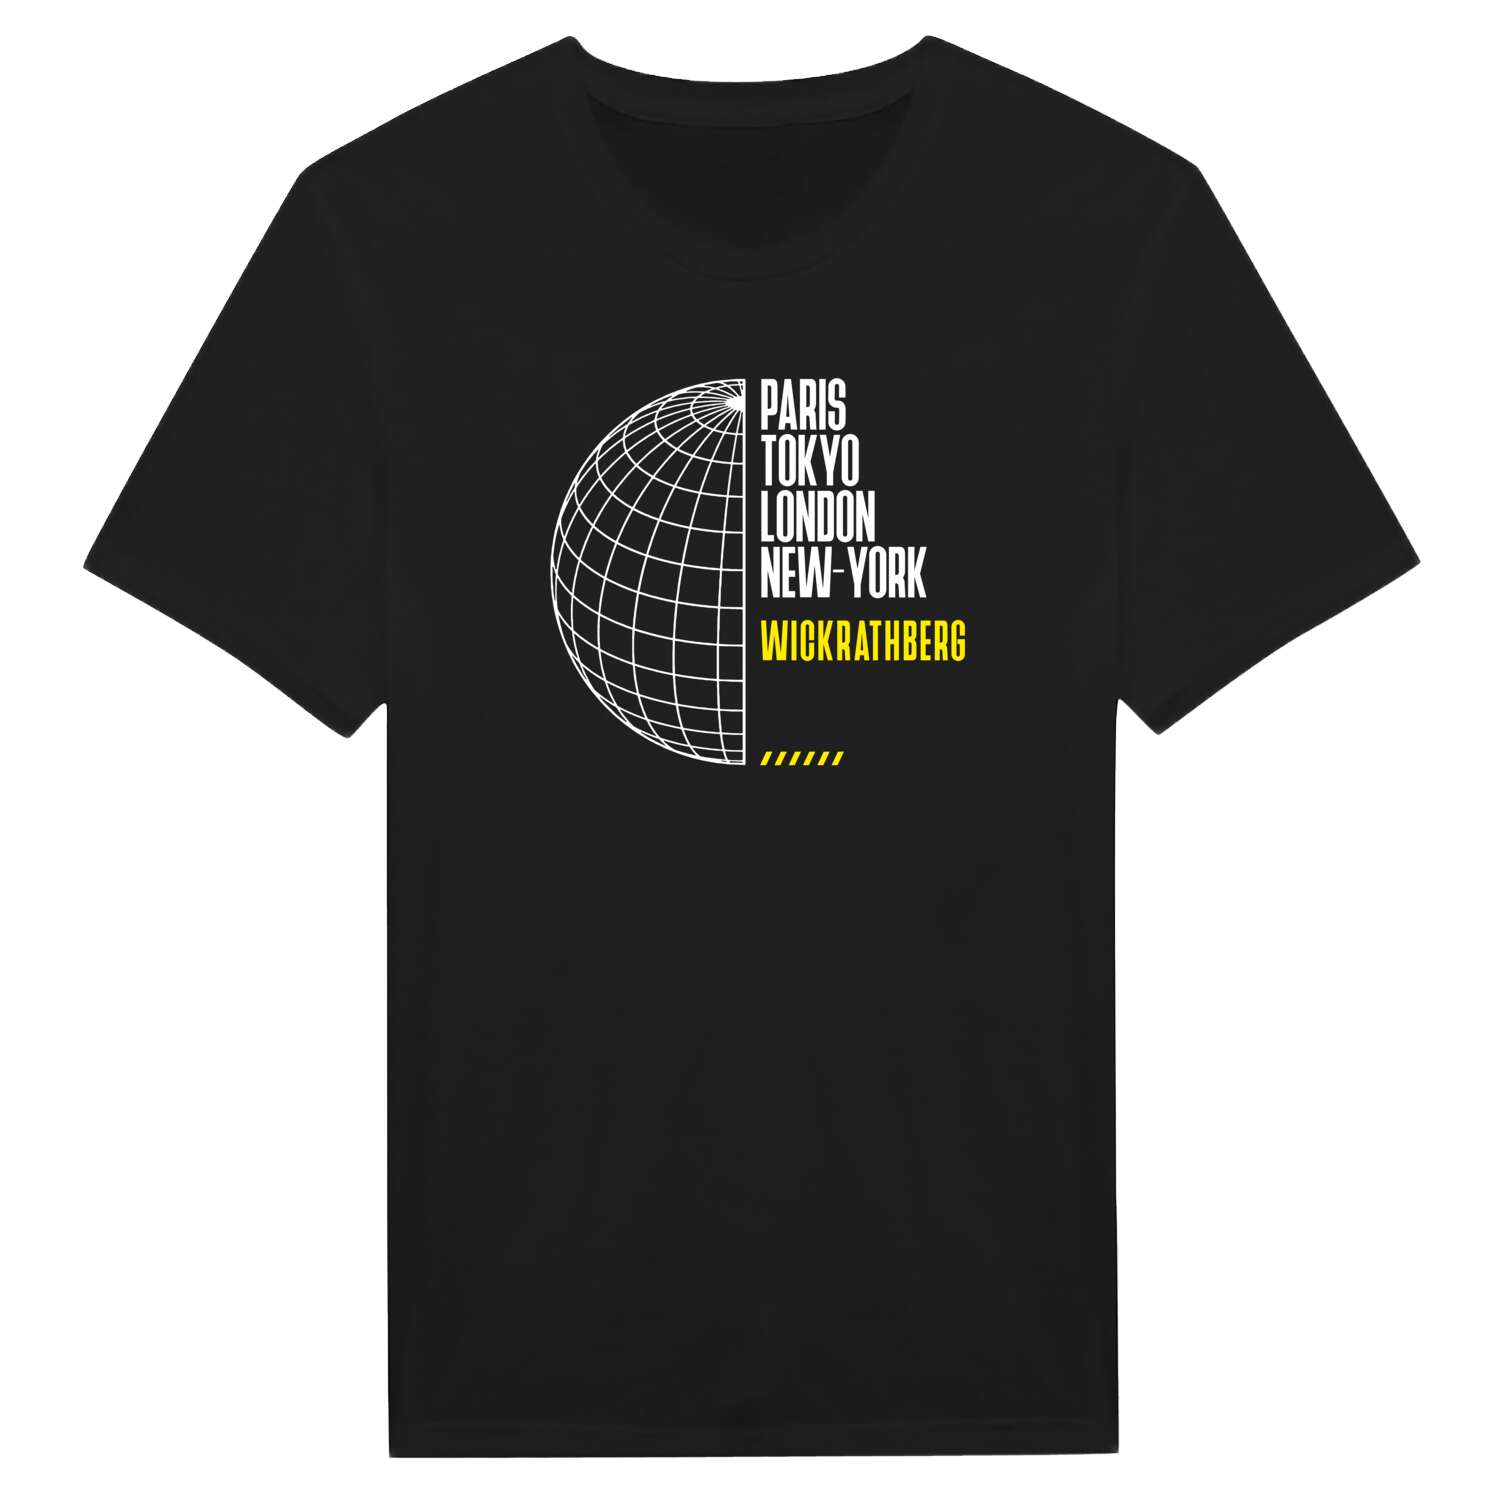 Wickrathberg T-Shirt »Paris Tokyo London«